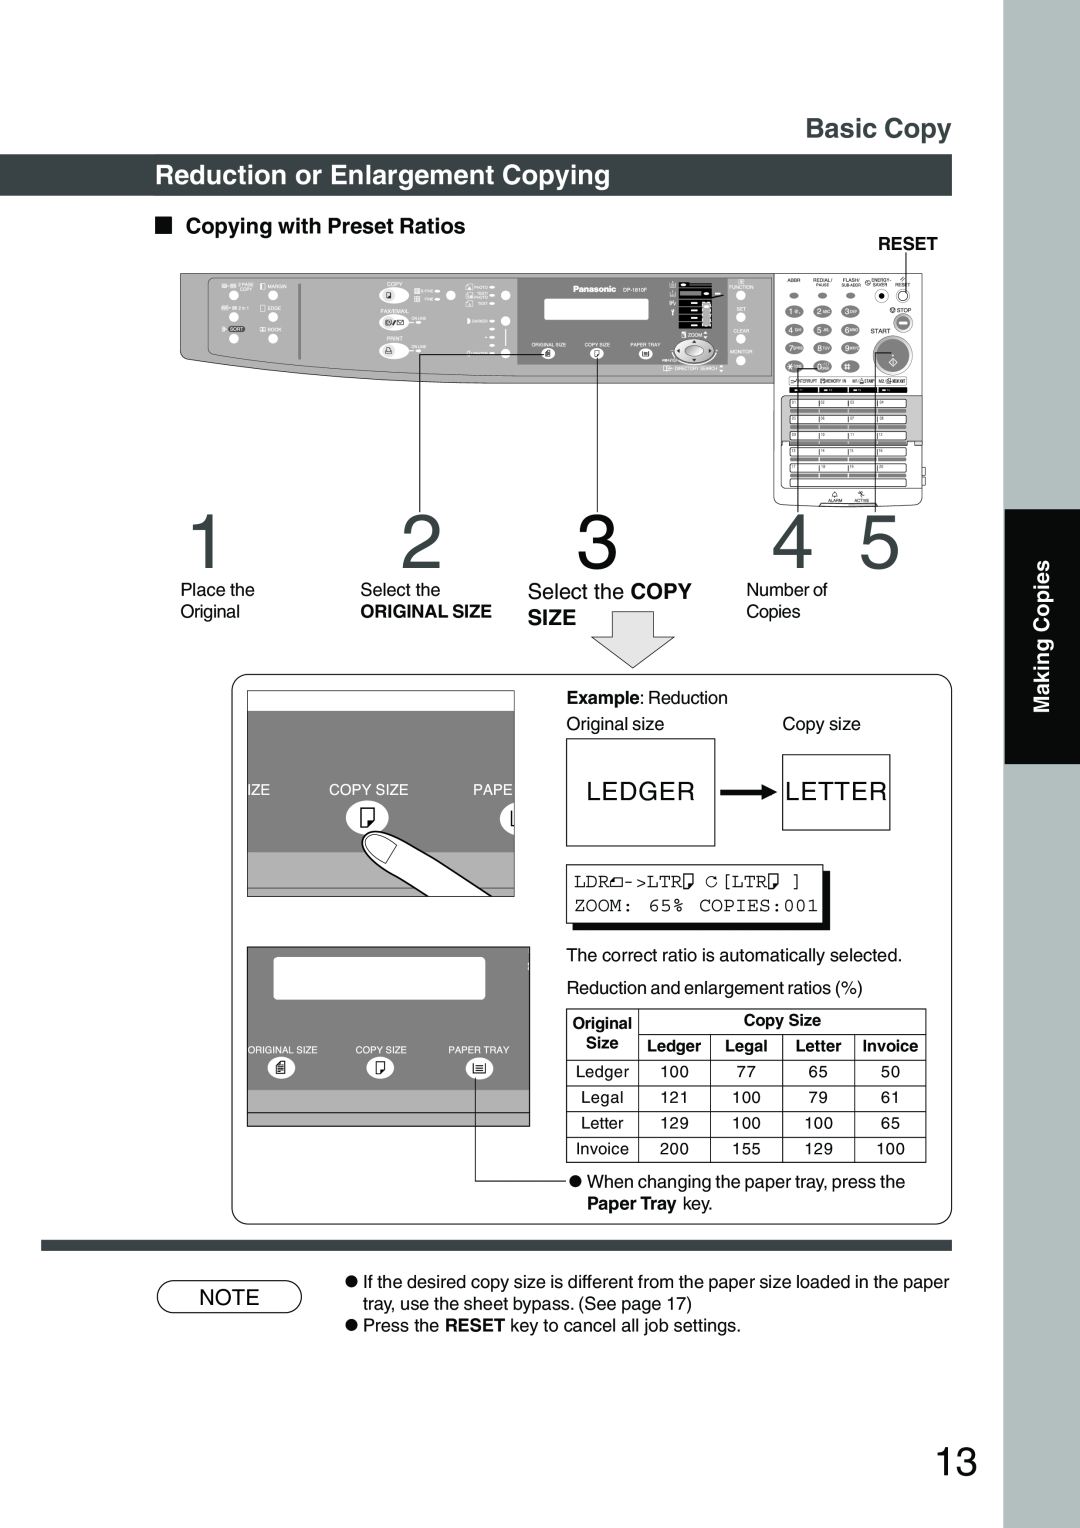 Panasonic DP-1810F manual Basic Copy, Reduction or Enlargement Copying, Copying with Preset Ratios, Size, Making Copies 